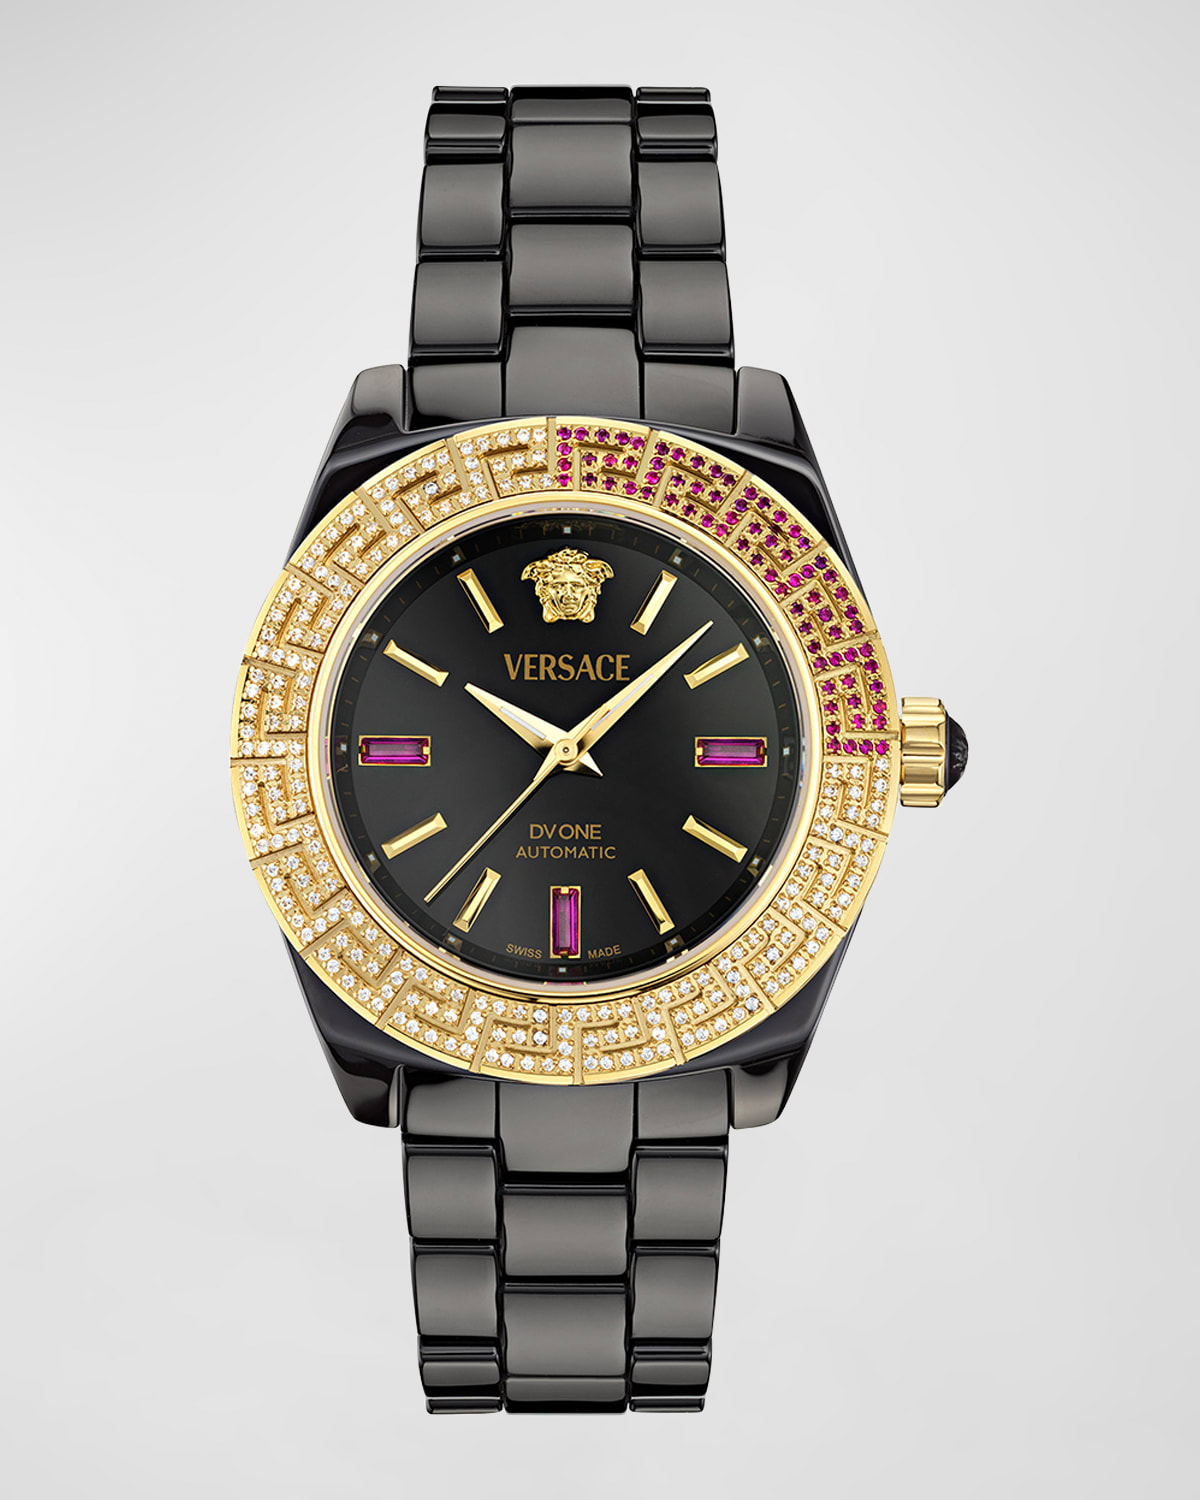 Versace 40mm Dv One Automatic Watch With Bracelet Strap, Black